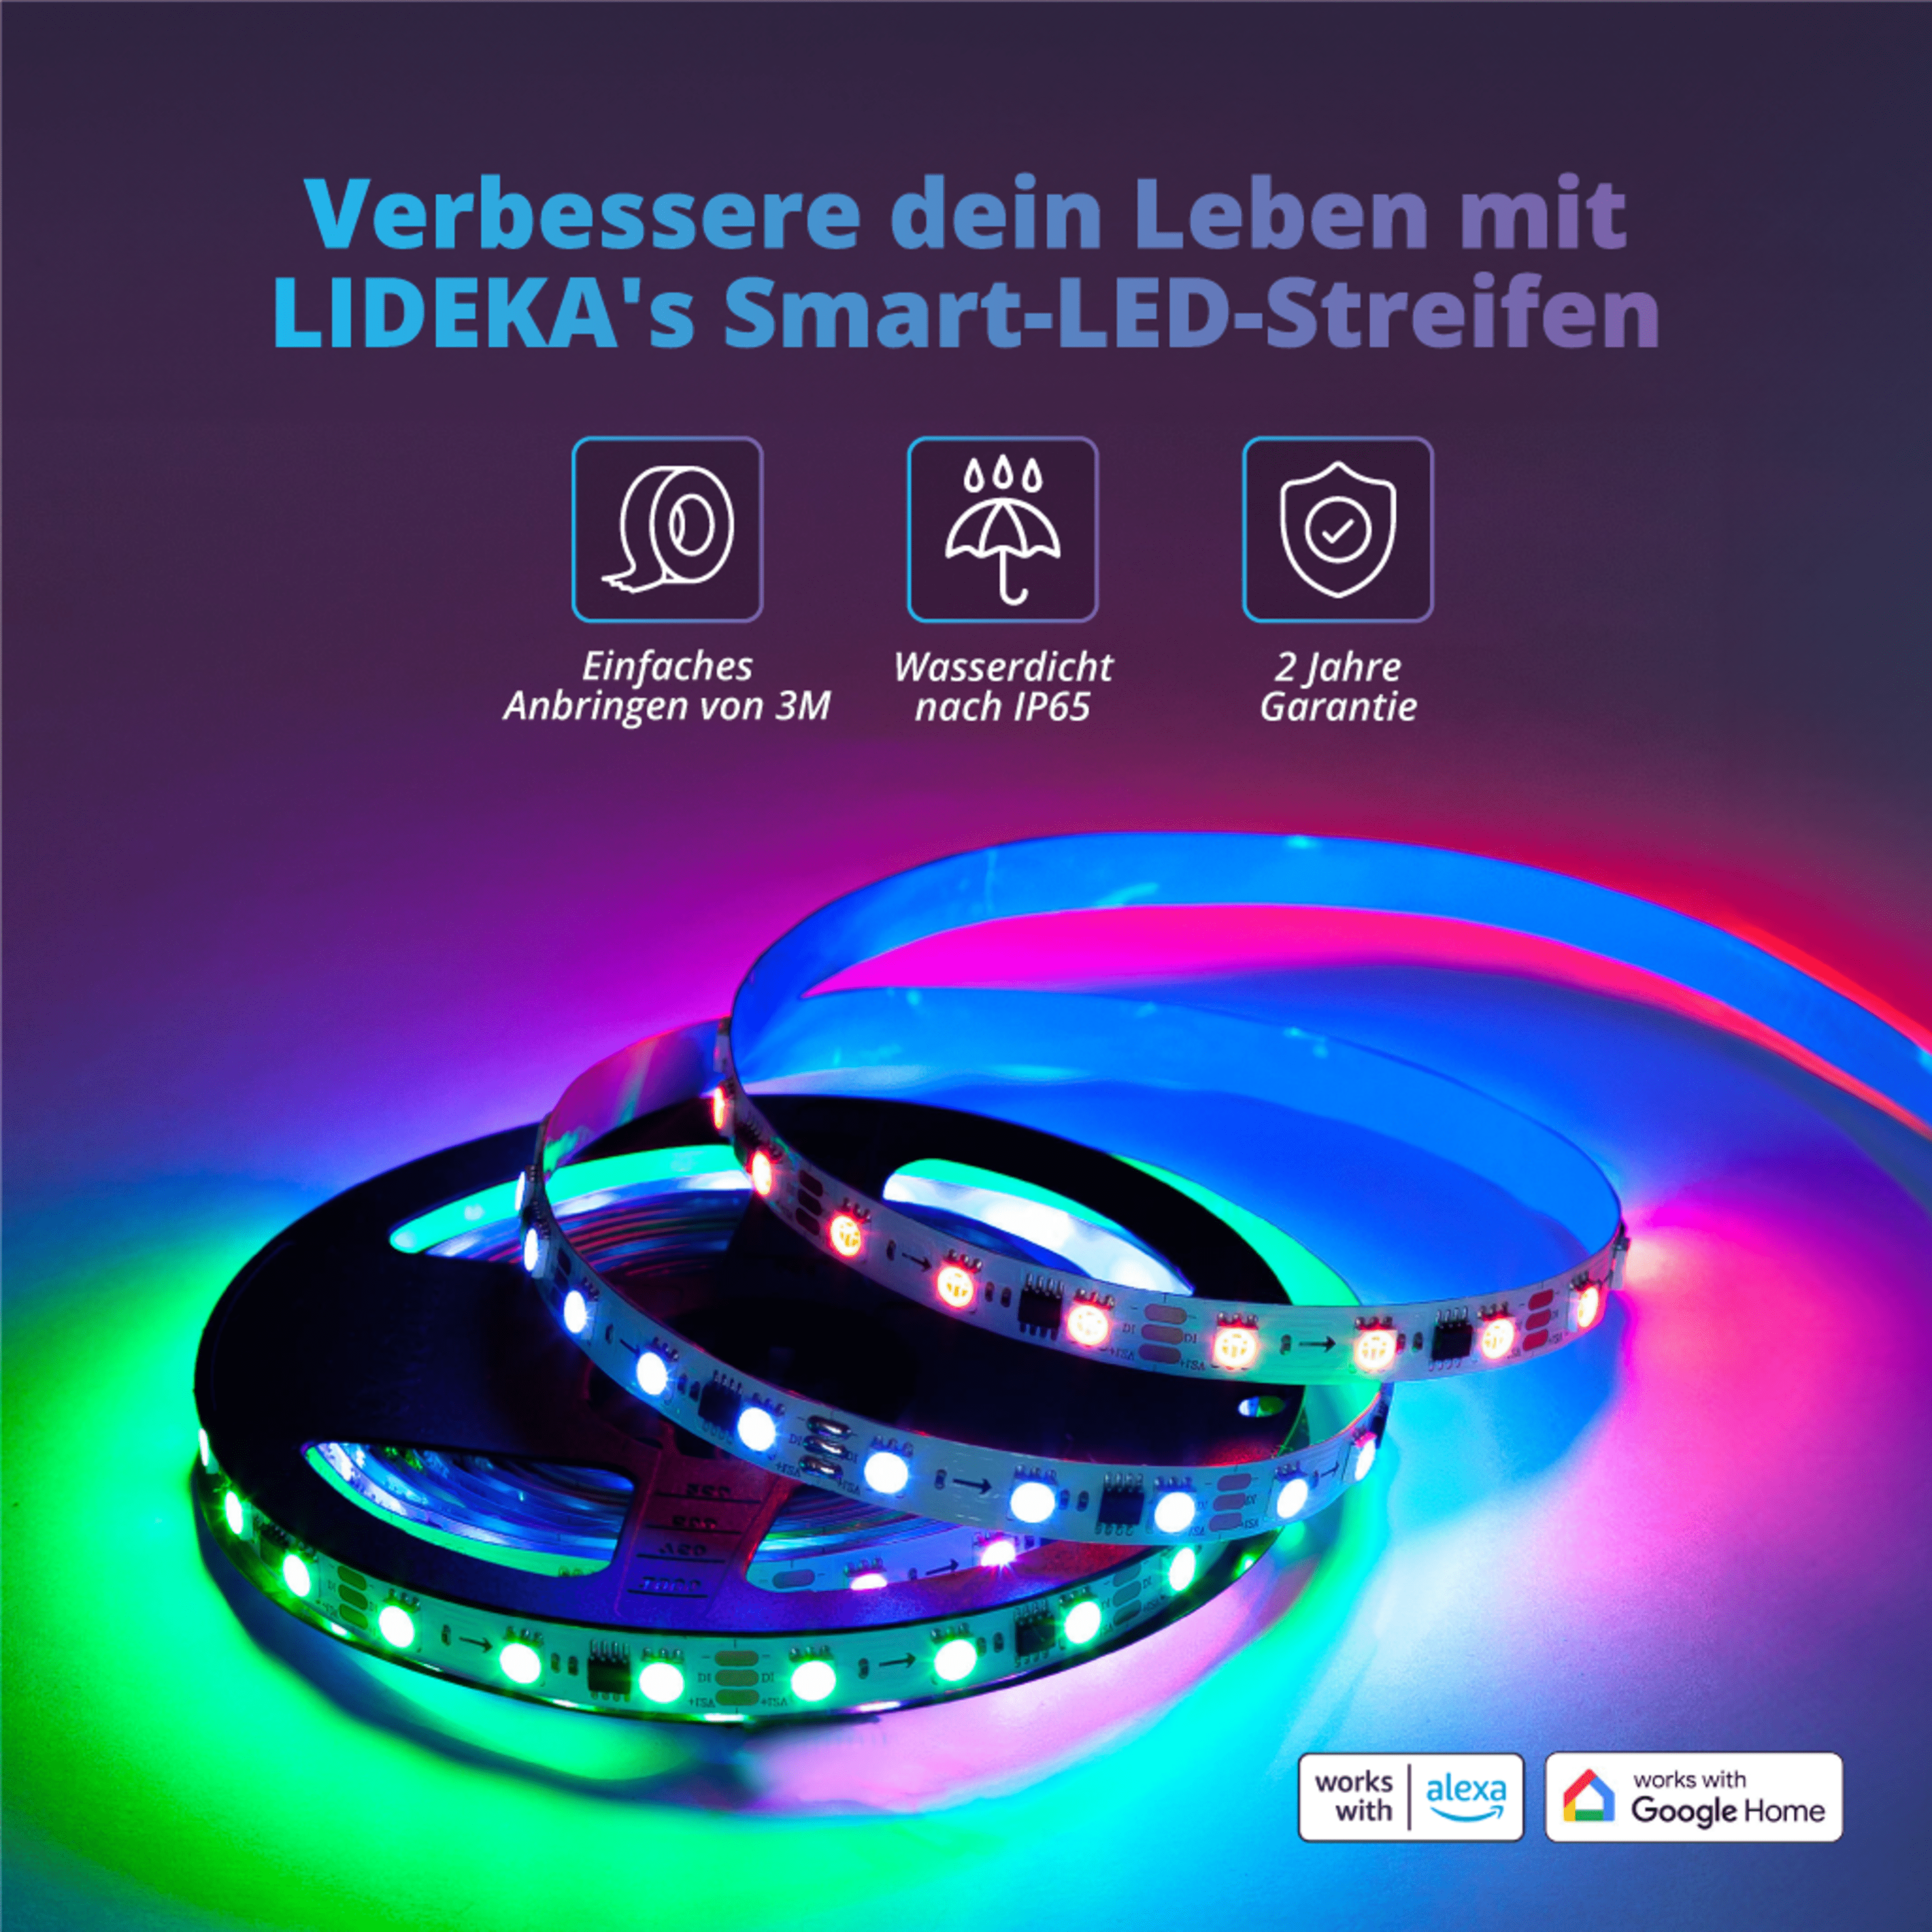 LIDEKA LED-Streifen 40m RGBIC Regenbogen LED strips Multicolors